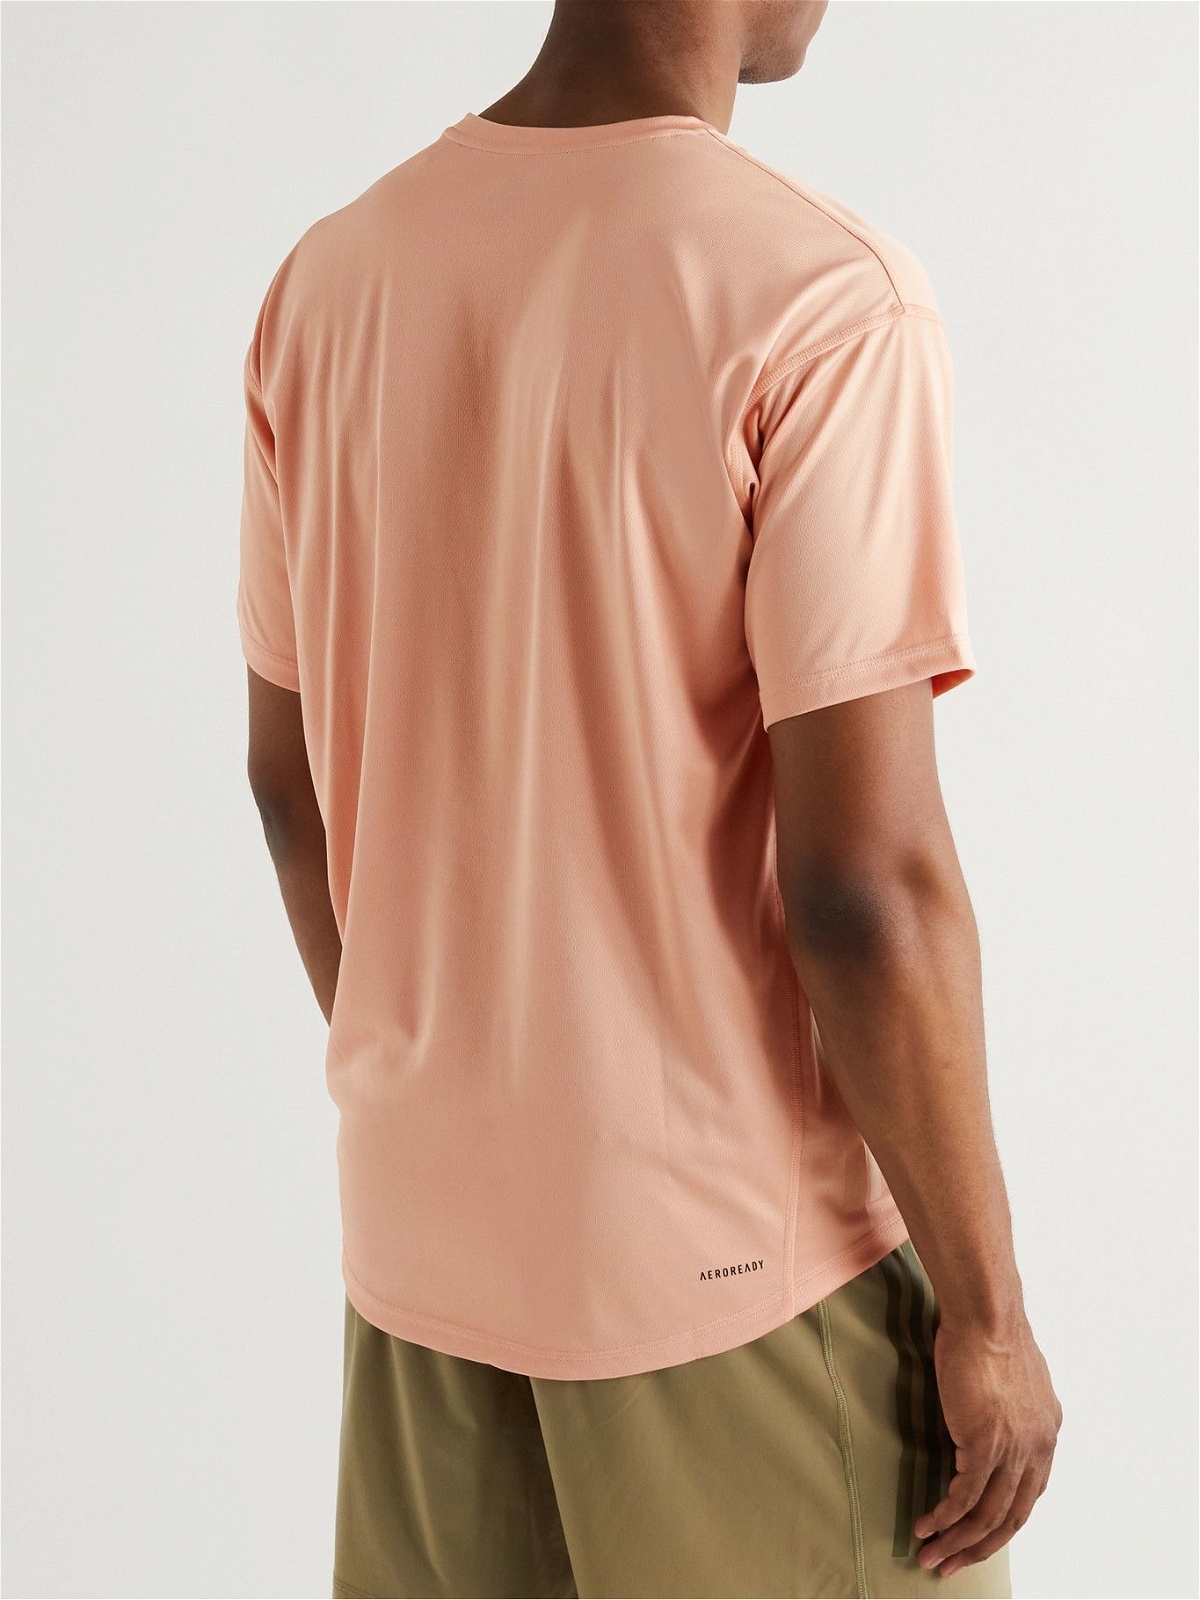 T-Shirt Pink Primegreen - adidas AEROREADY adidas Sport - Yoga